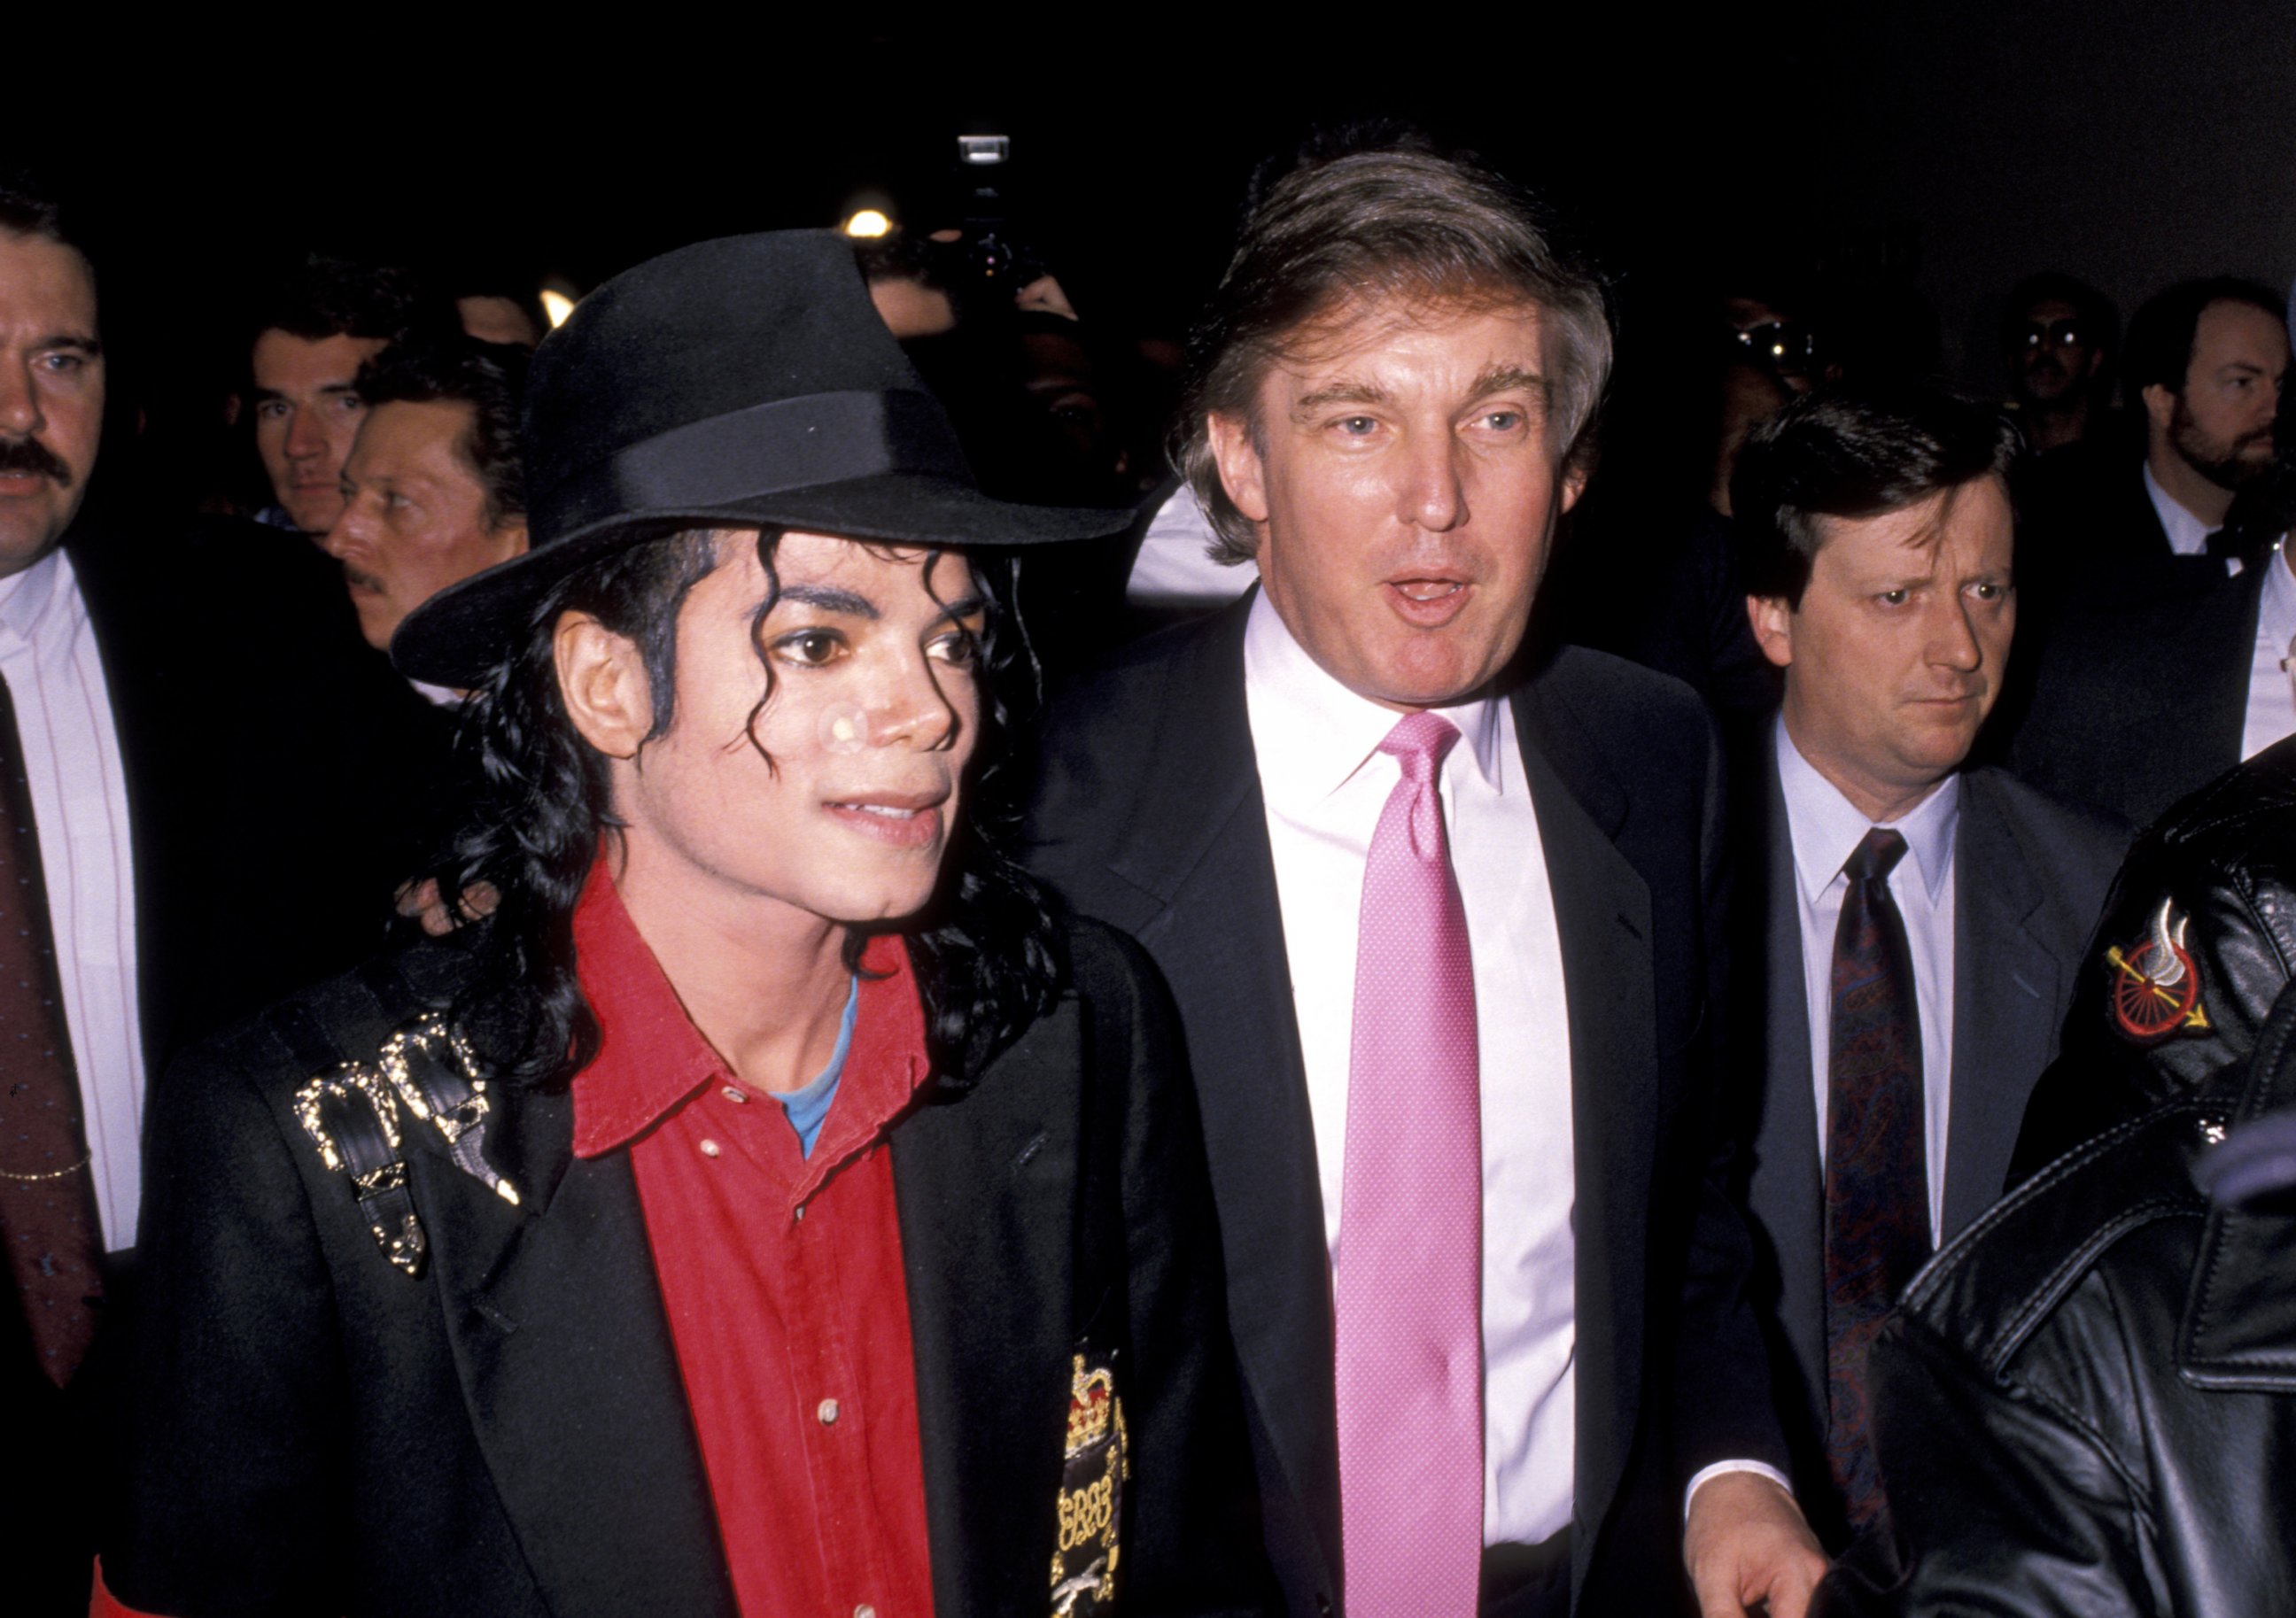 PHOTO: Michael Jackson and Donald Trump at Donald Trump's Taj Mahal Casino opening on April 5, 1990 in Atlantic City, New Jersey.